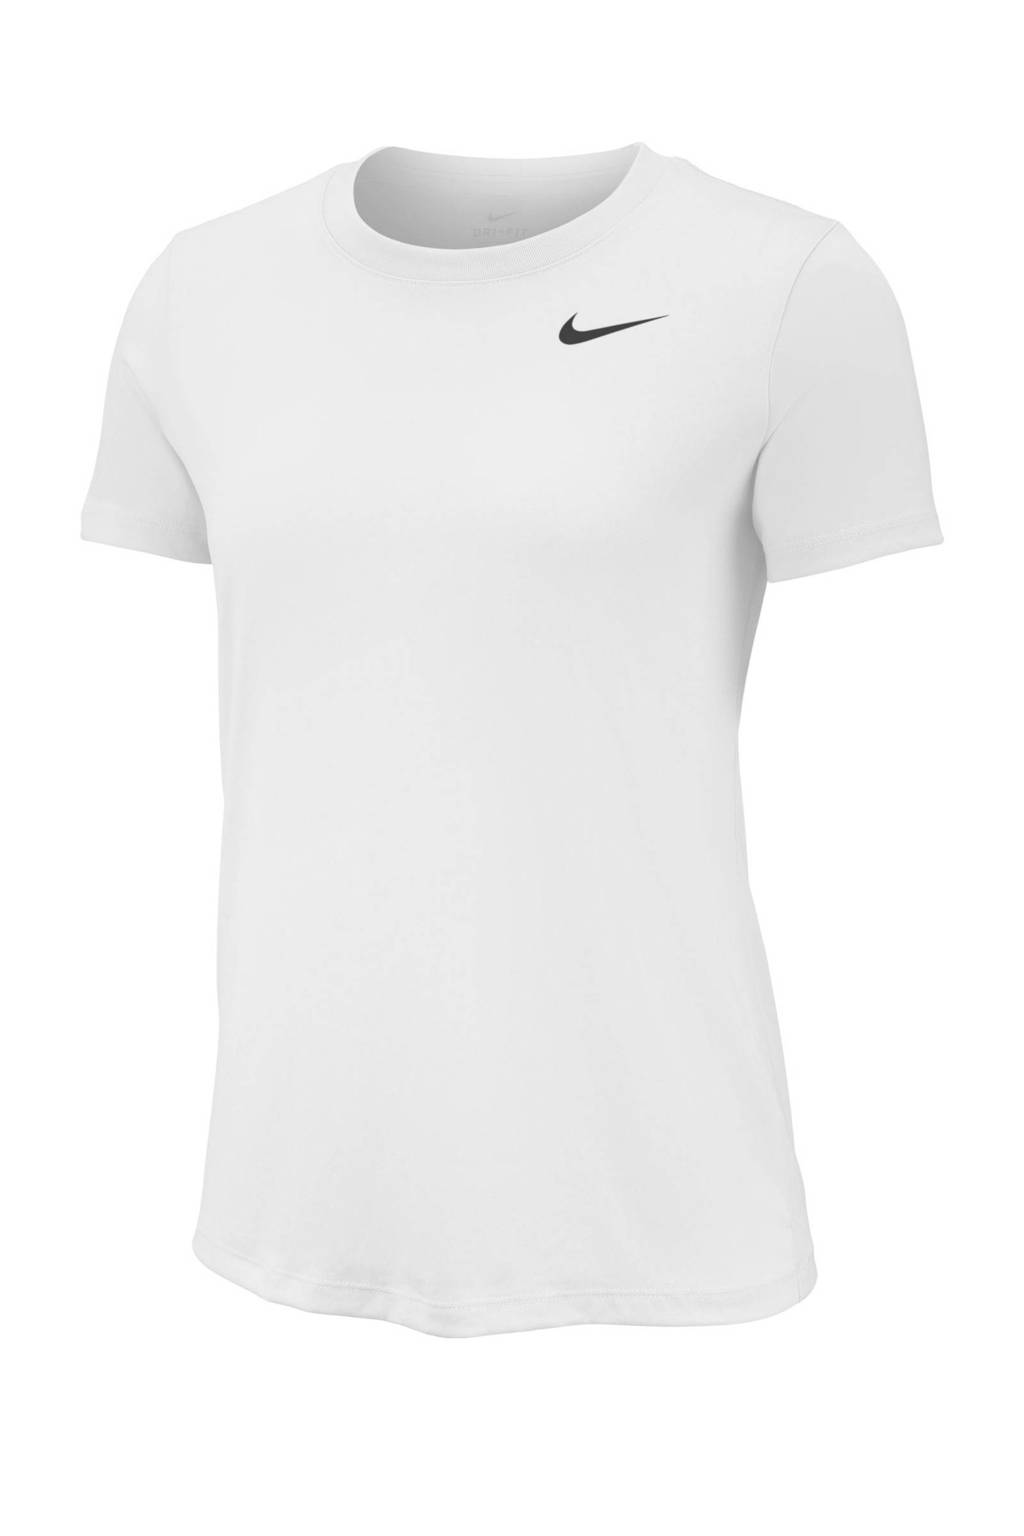 Nike sport T-shirt wit